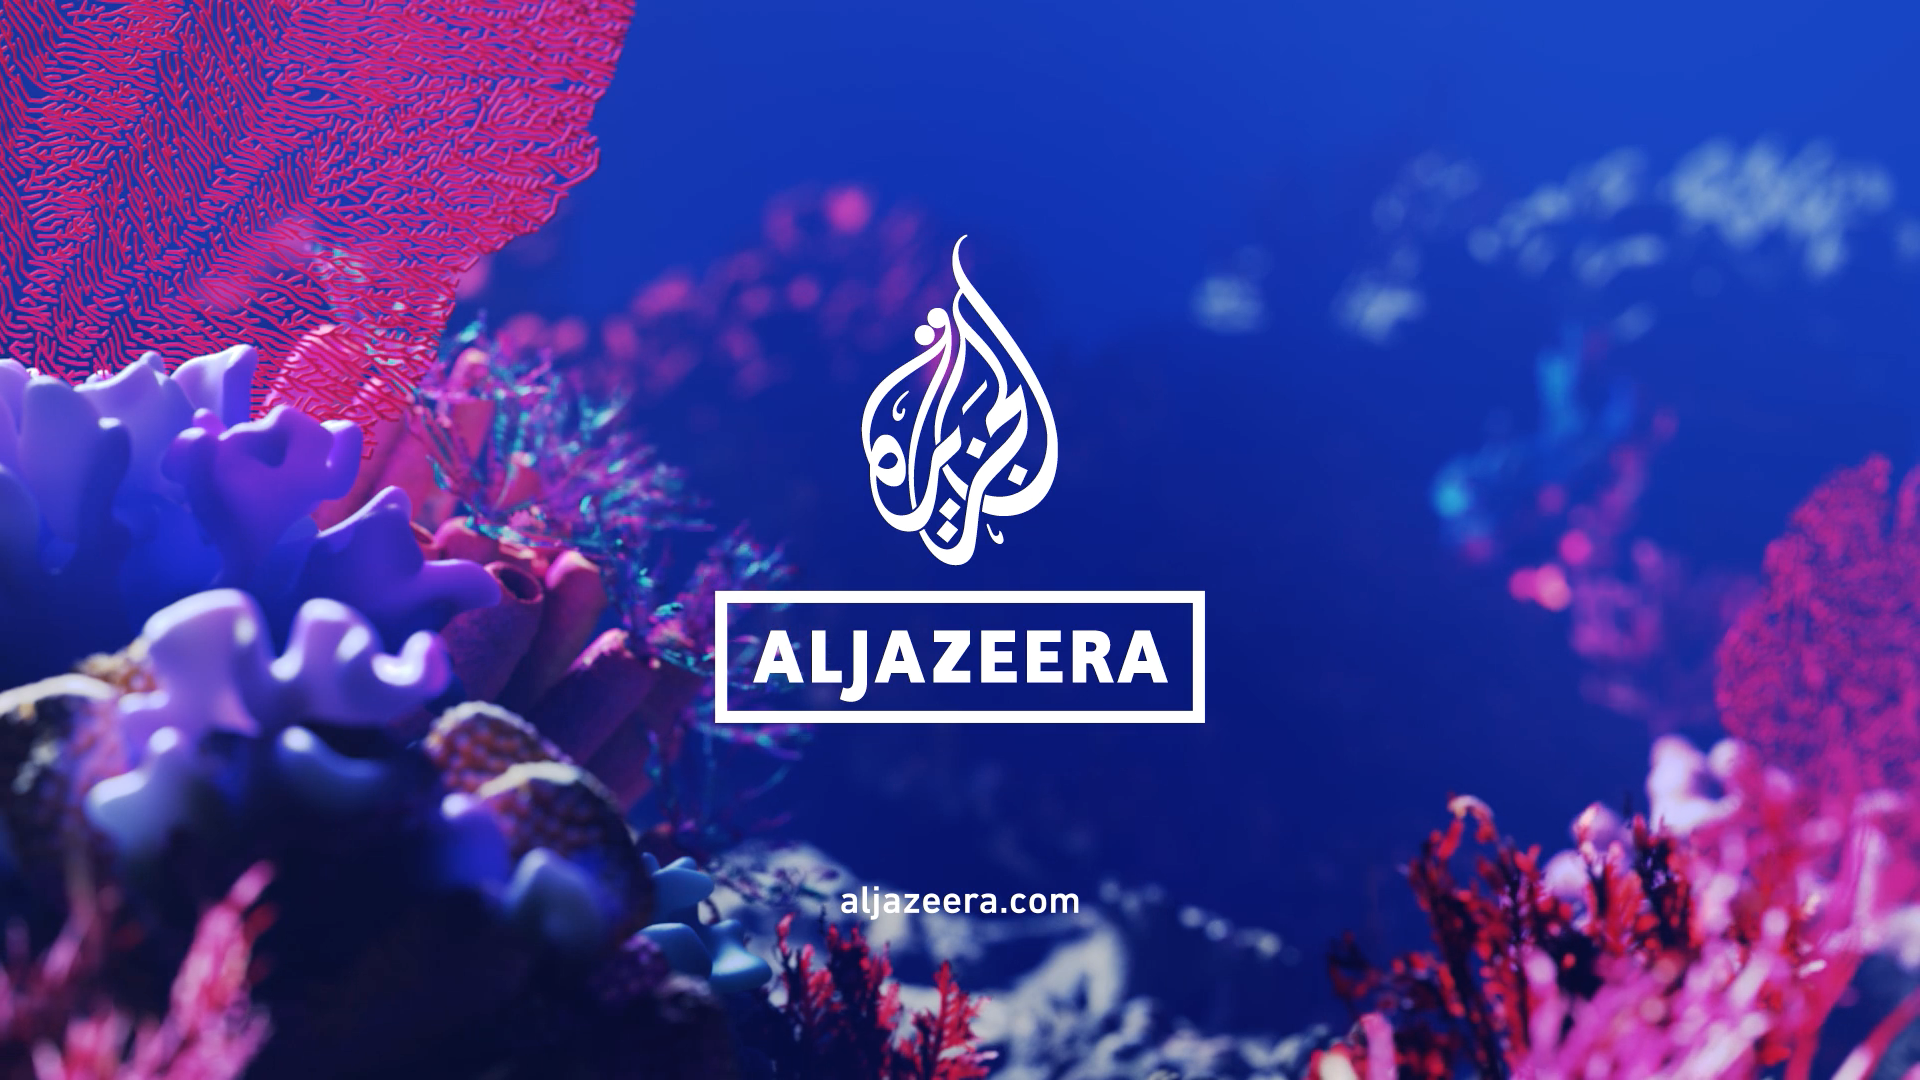 Al Jazeera Archives - Motion design - STASH : Motion design – STASH